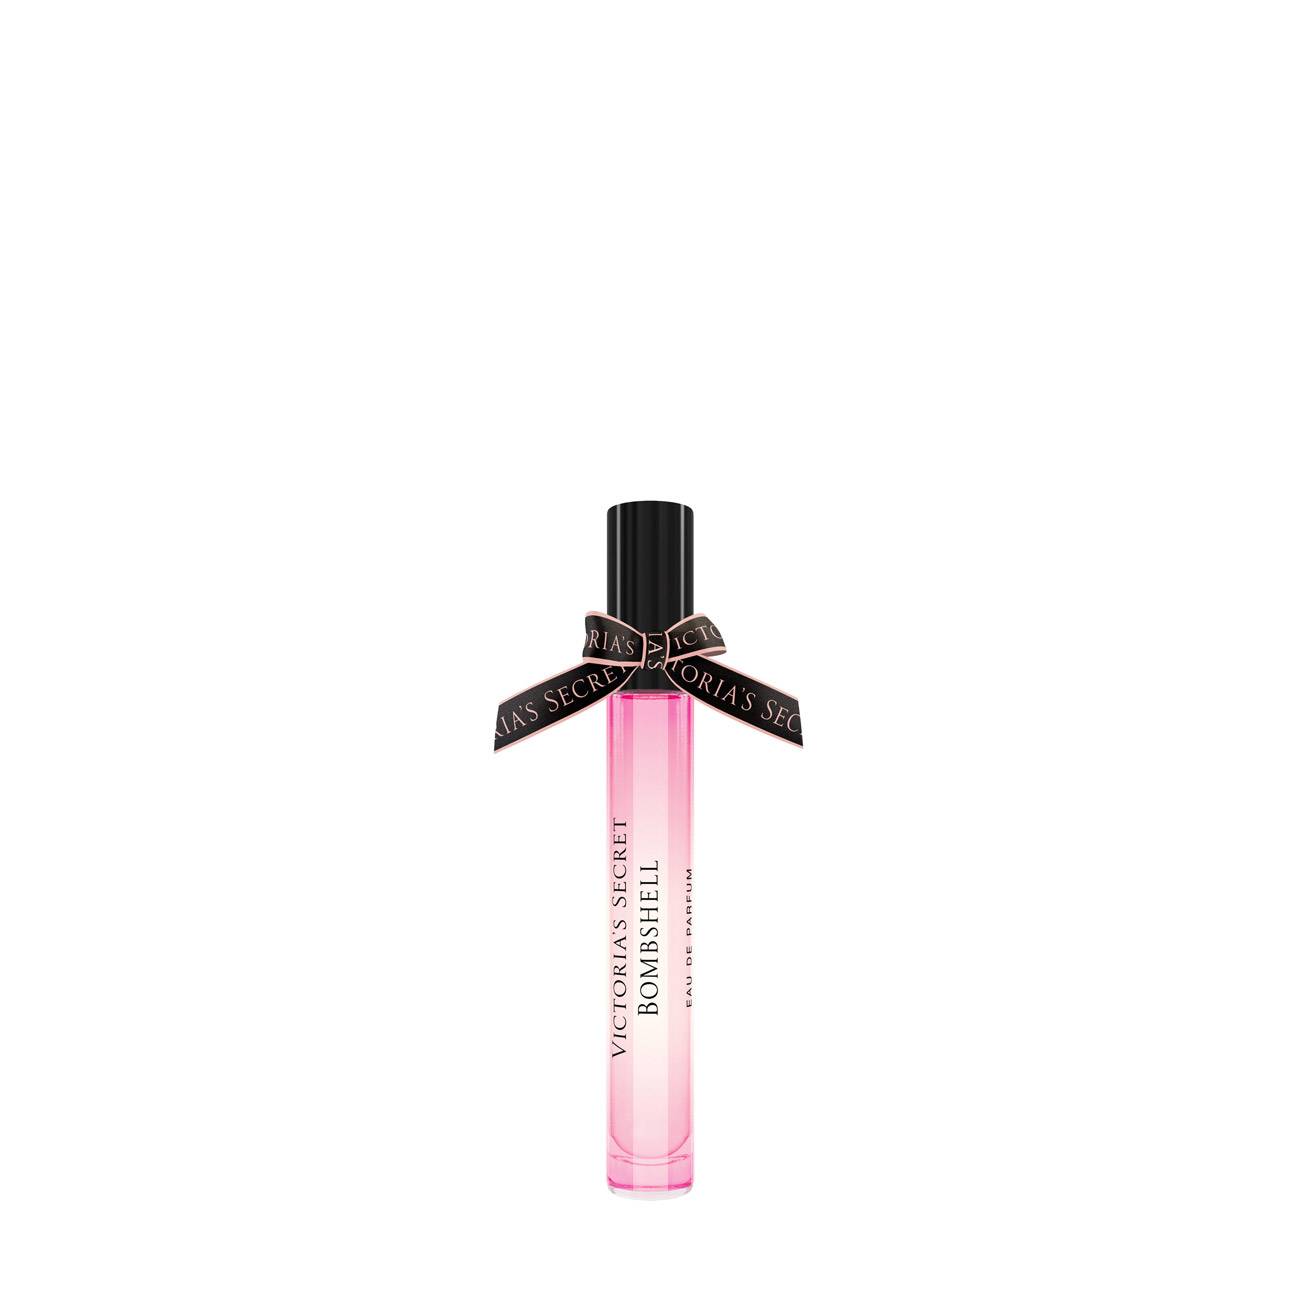 Apa de Parfum Victoria’s Secret BOMBSHELL ROLLERBALL 7ml cu comanda online